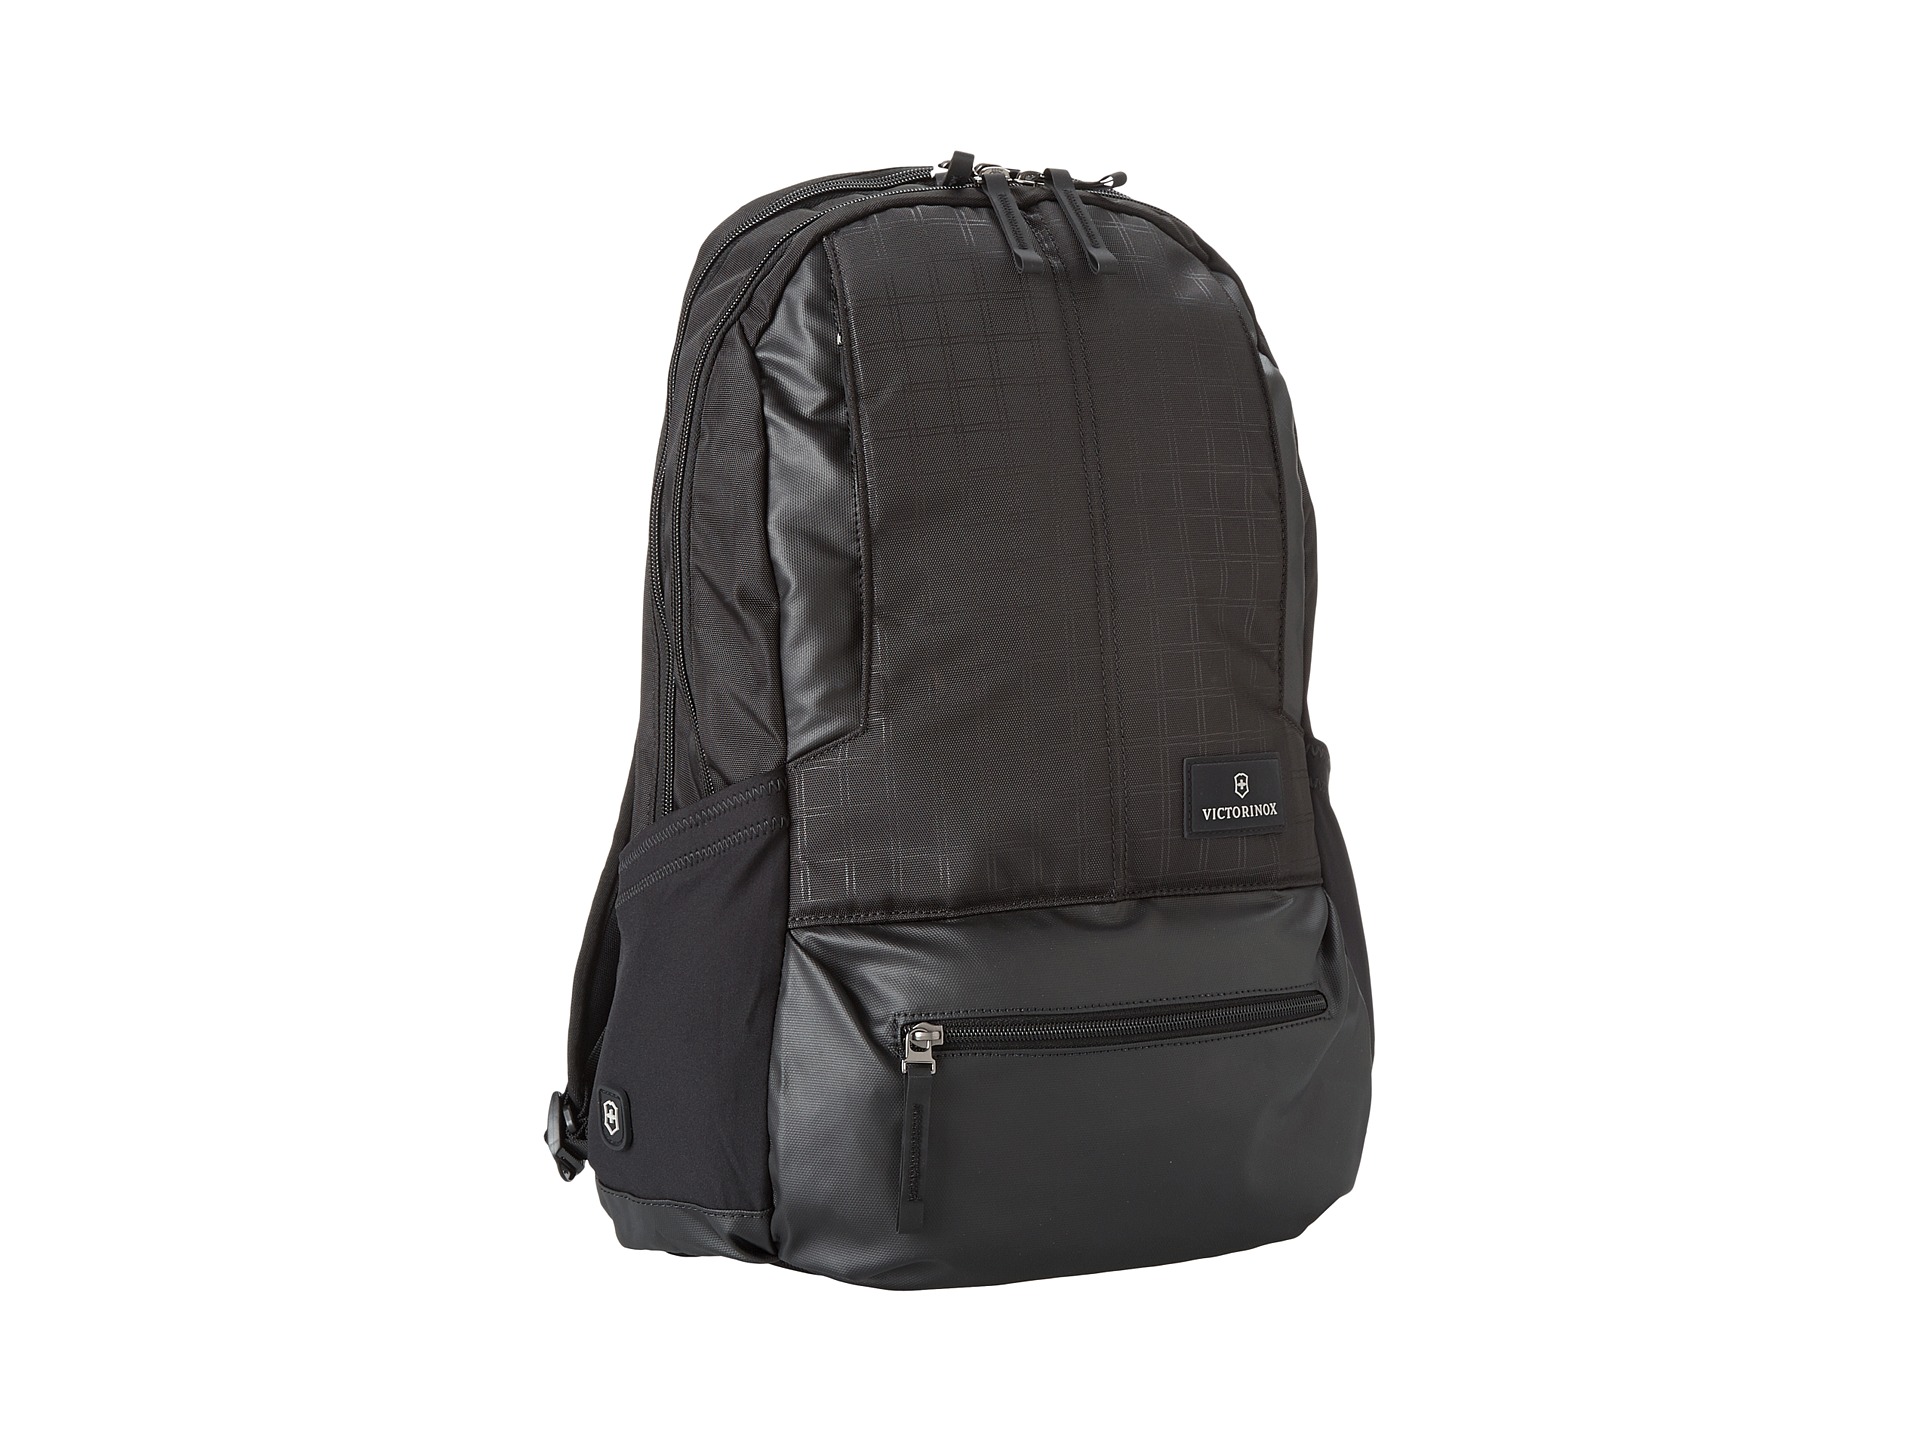 Victorinox Altmont™ 3.0 - Laptop Backpack at Zappos.com